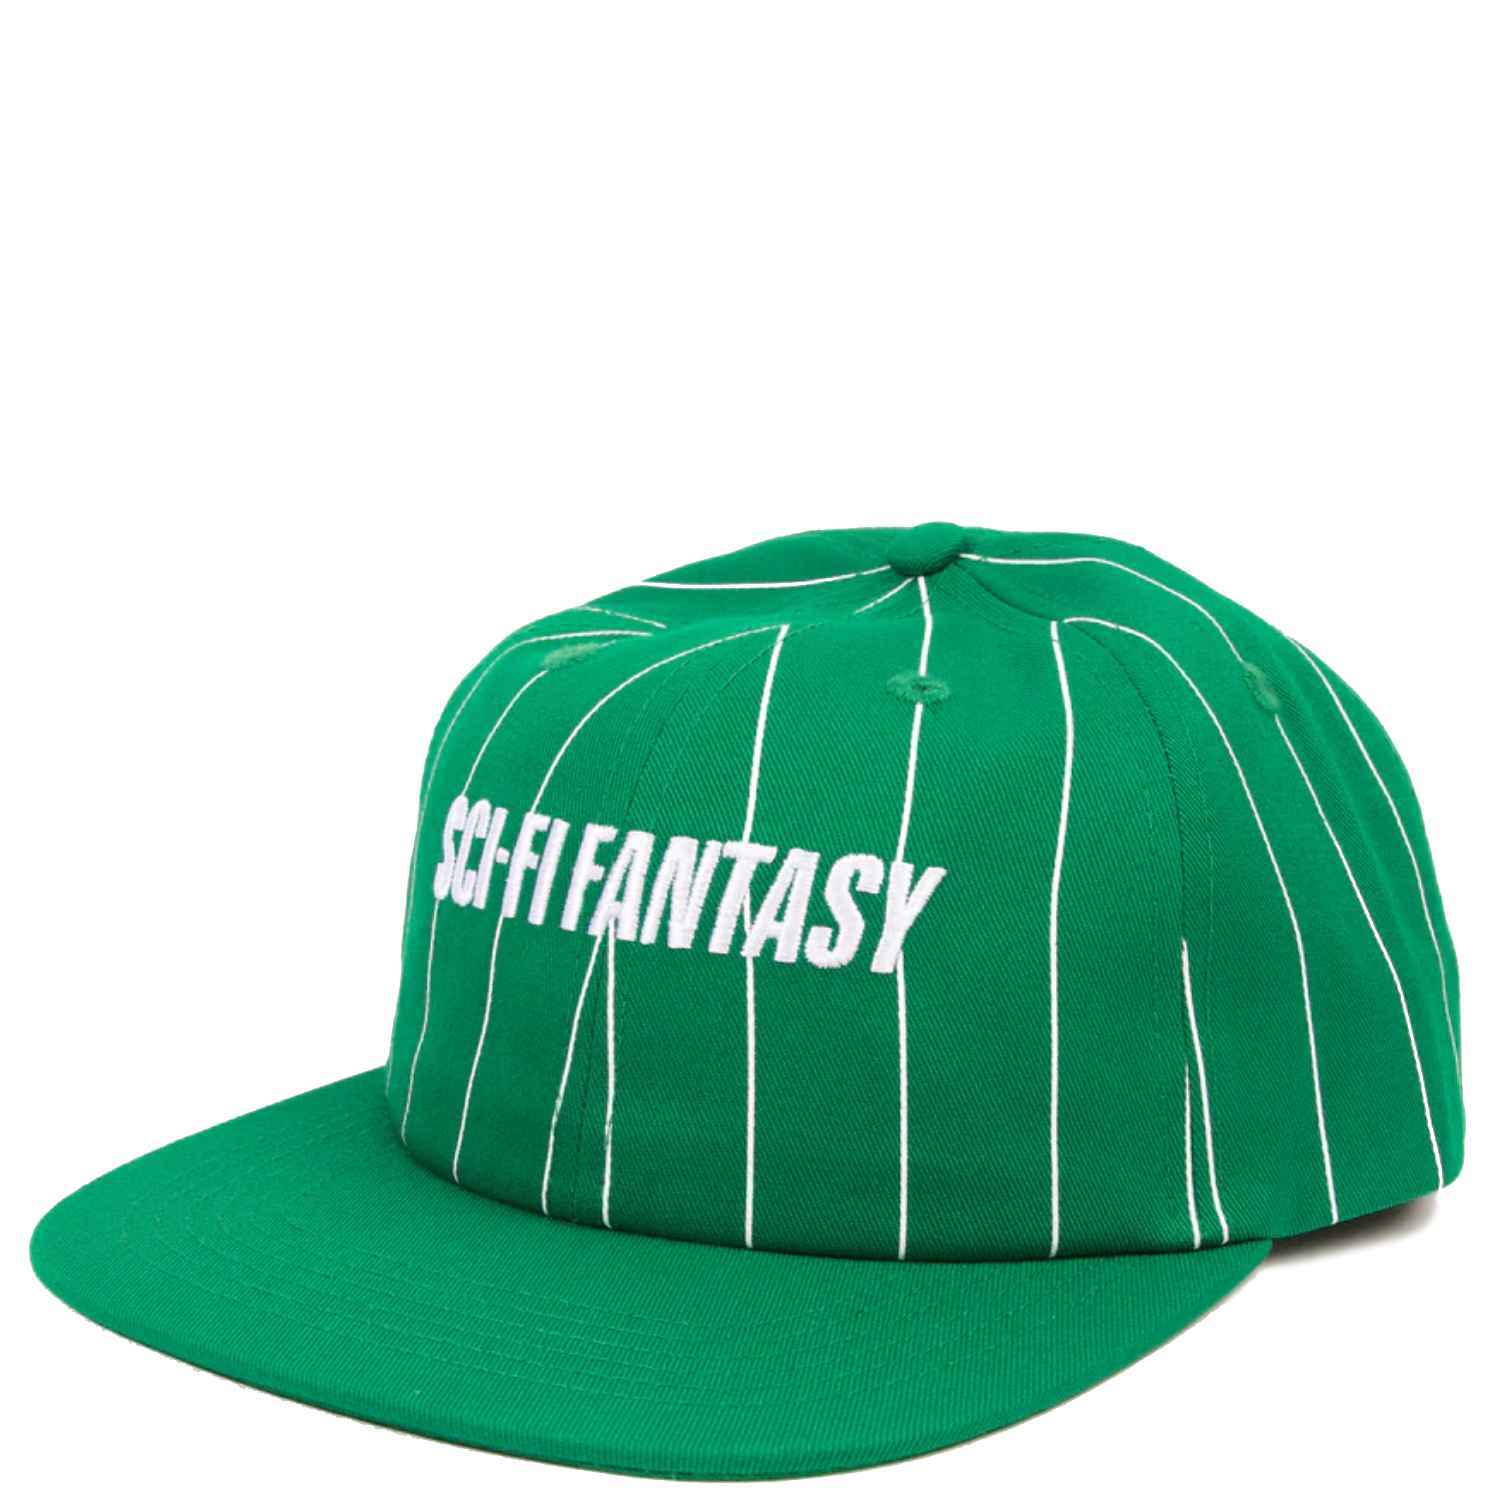 Sci-Fi Fantasy - Fast Stripe Hat - Green